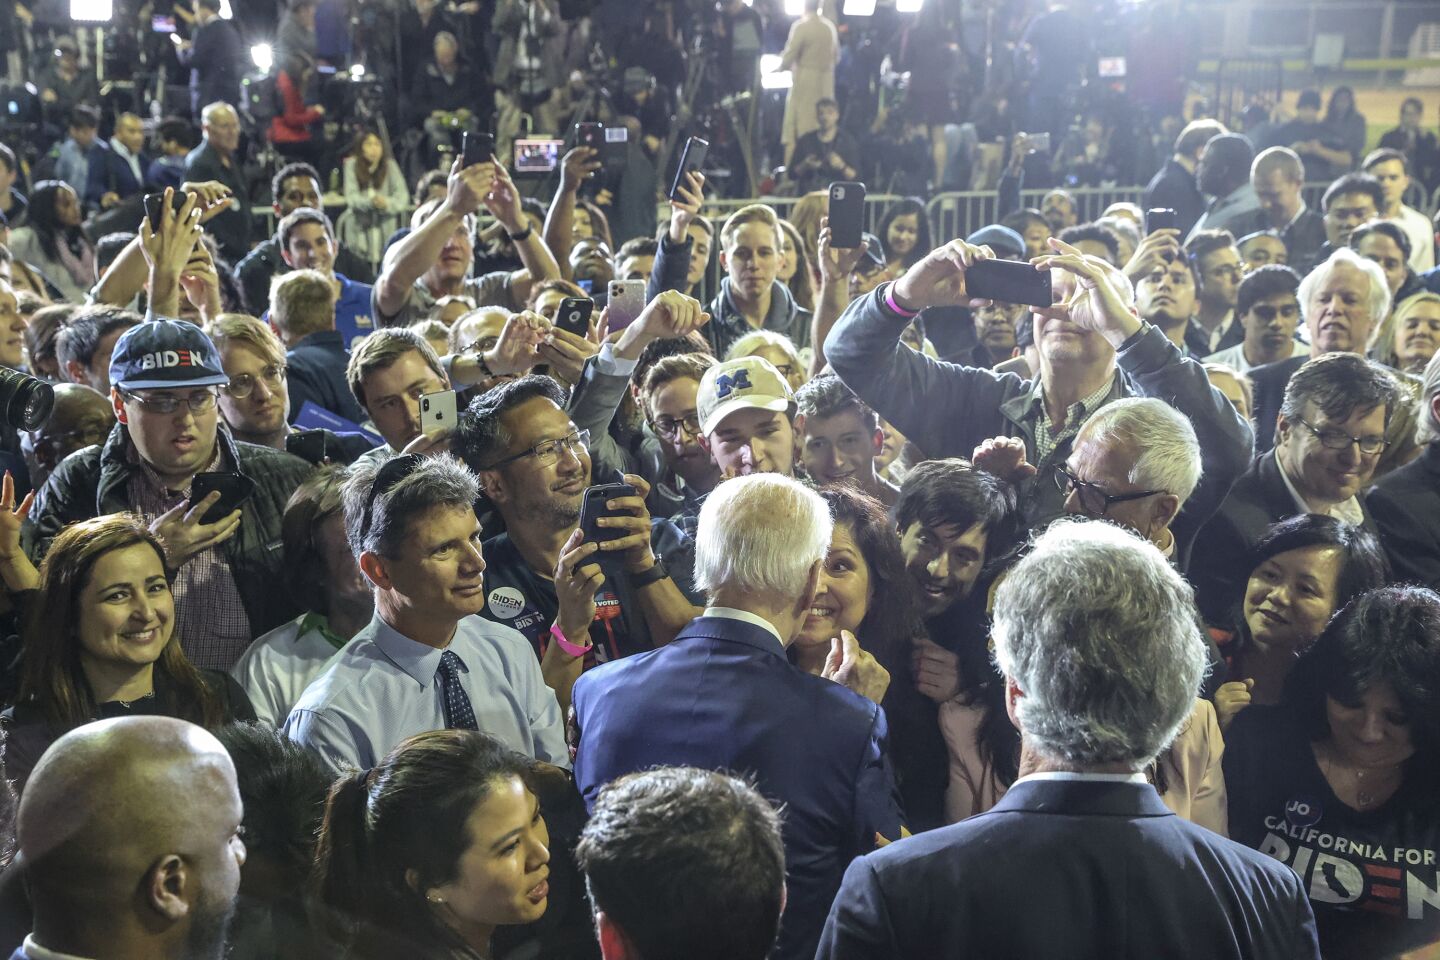 Joe Biden greets supporters following his L.A. speech.